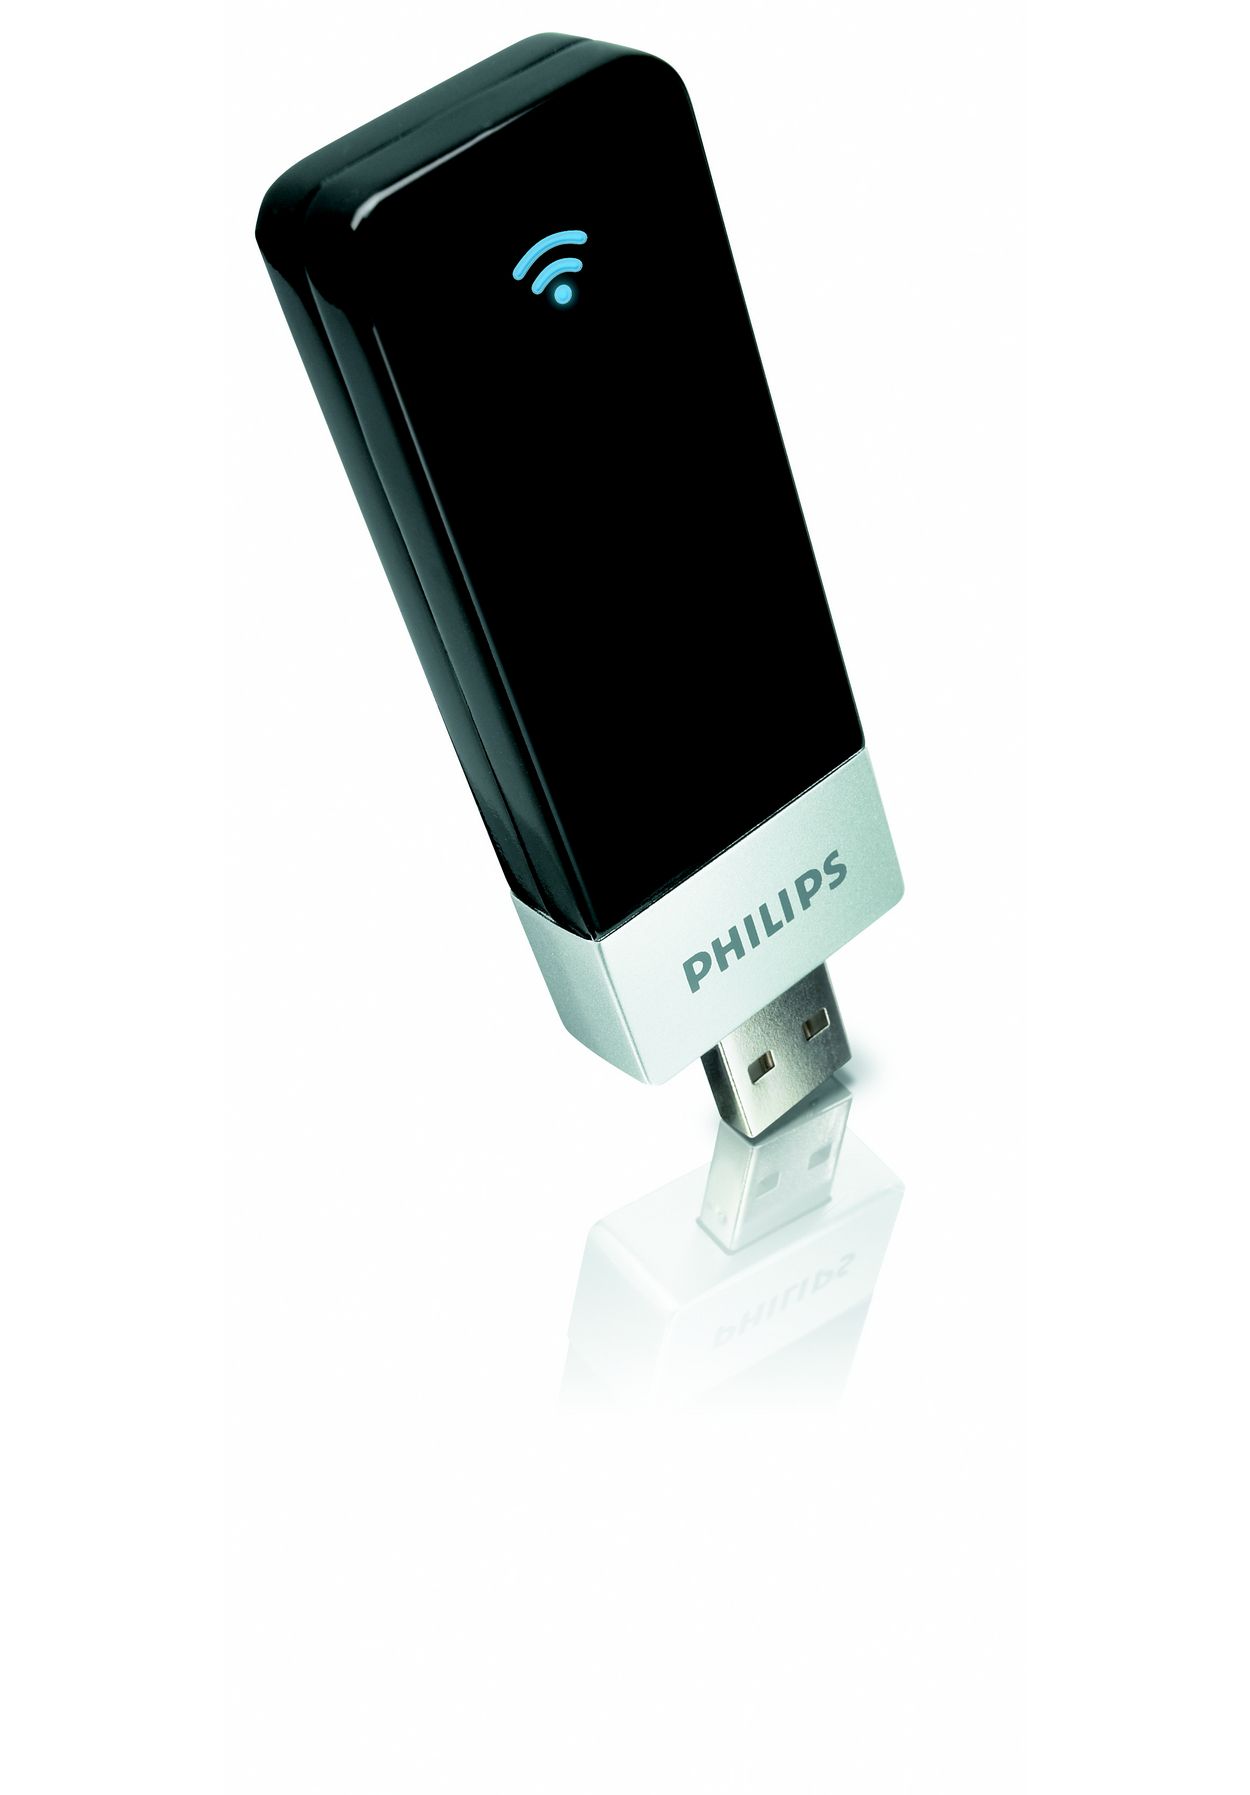 Филипс wifi. WIFI адаптер для телевизора Philips. Bluetooth адаптер 2,0 Филипс pta86000. Intex Wireless Adapter 11b/g. Philips беспроводной.